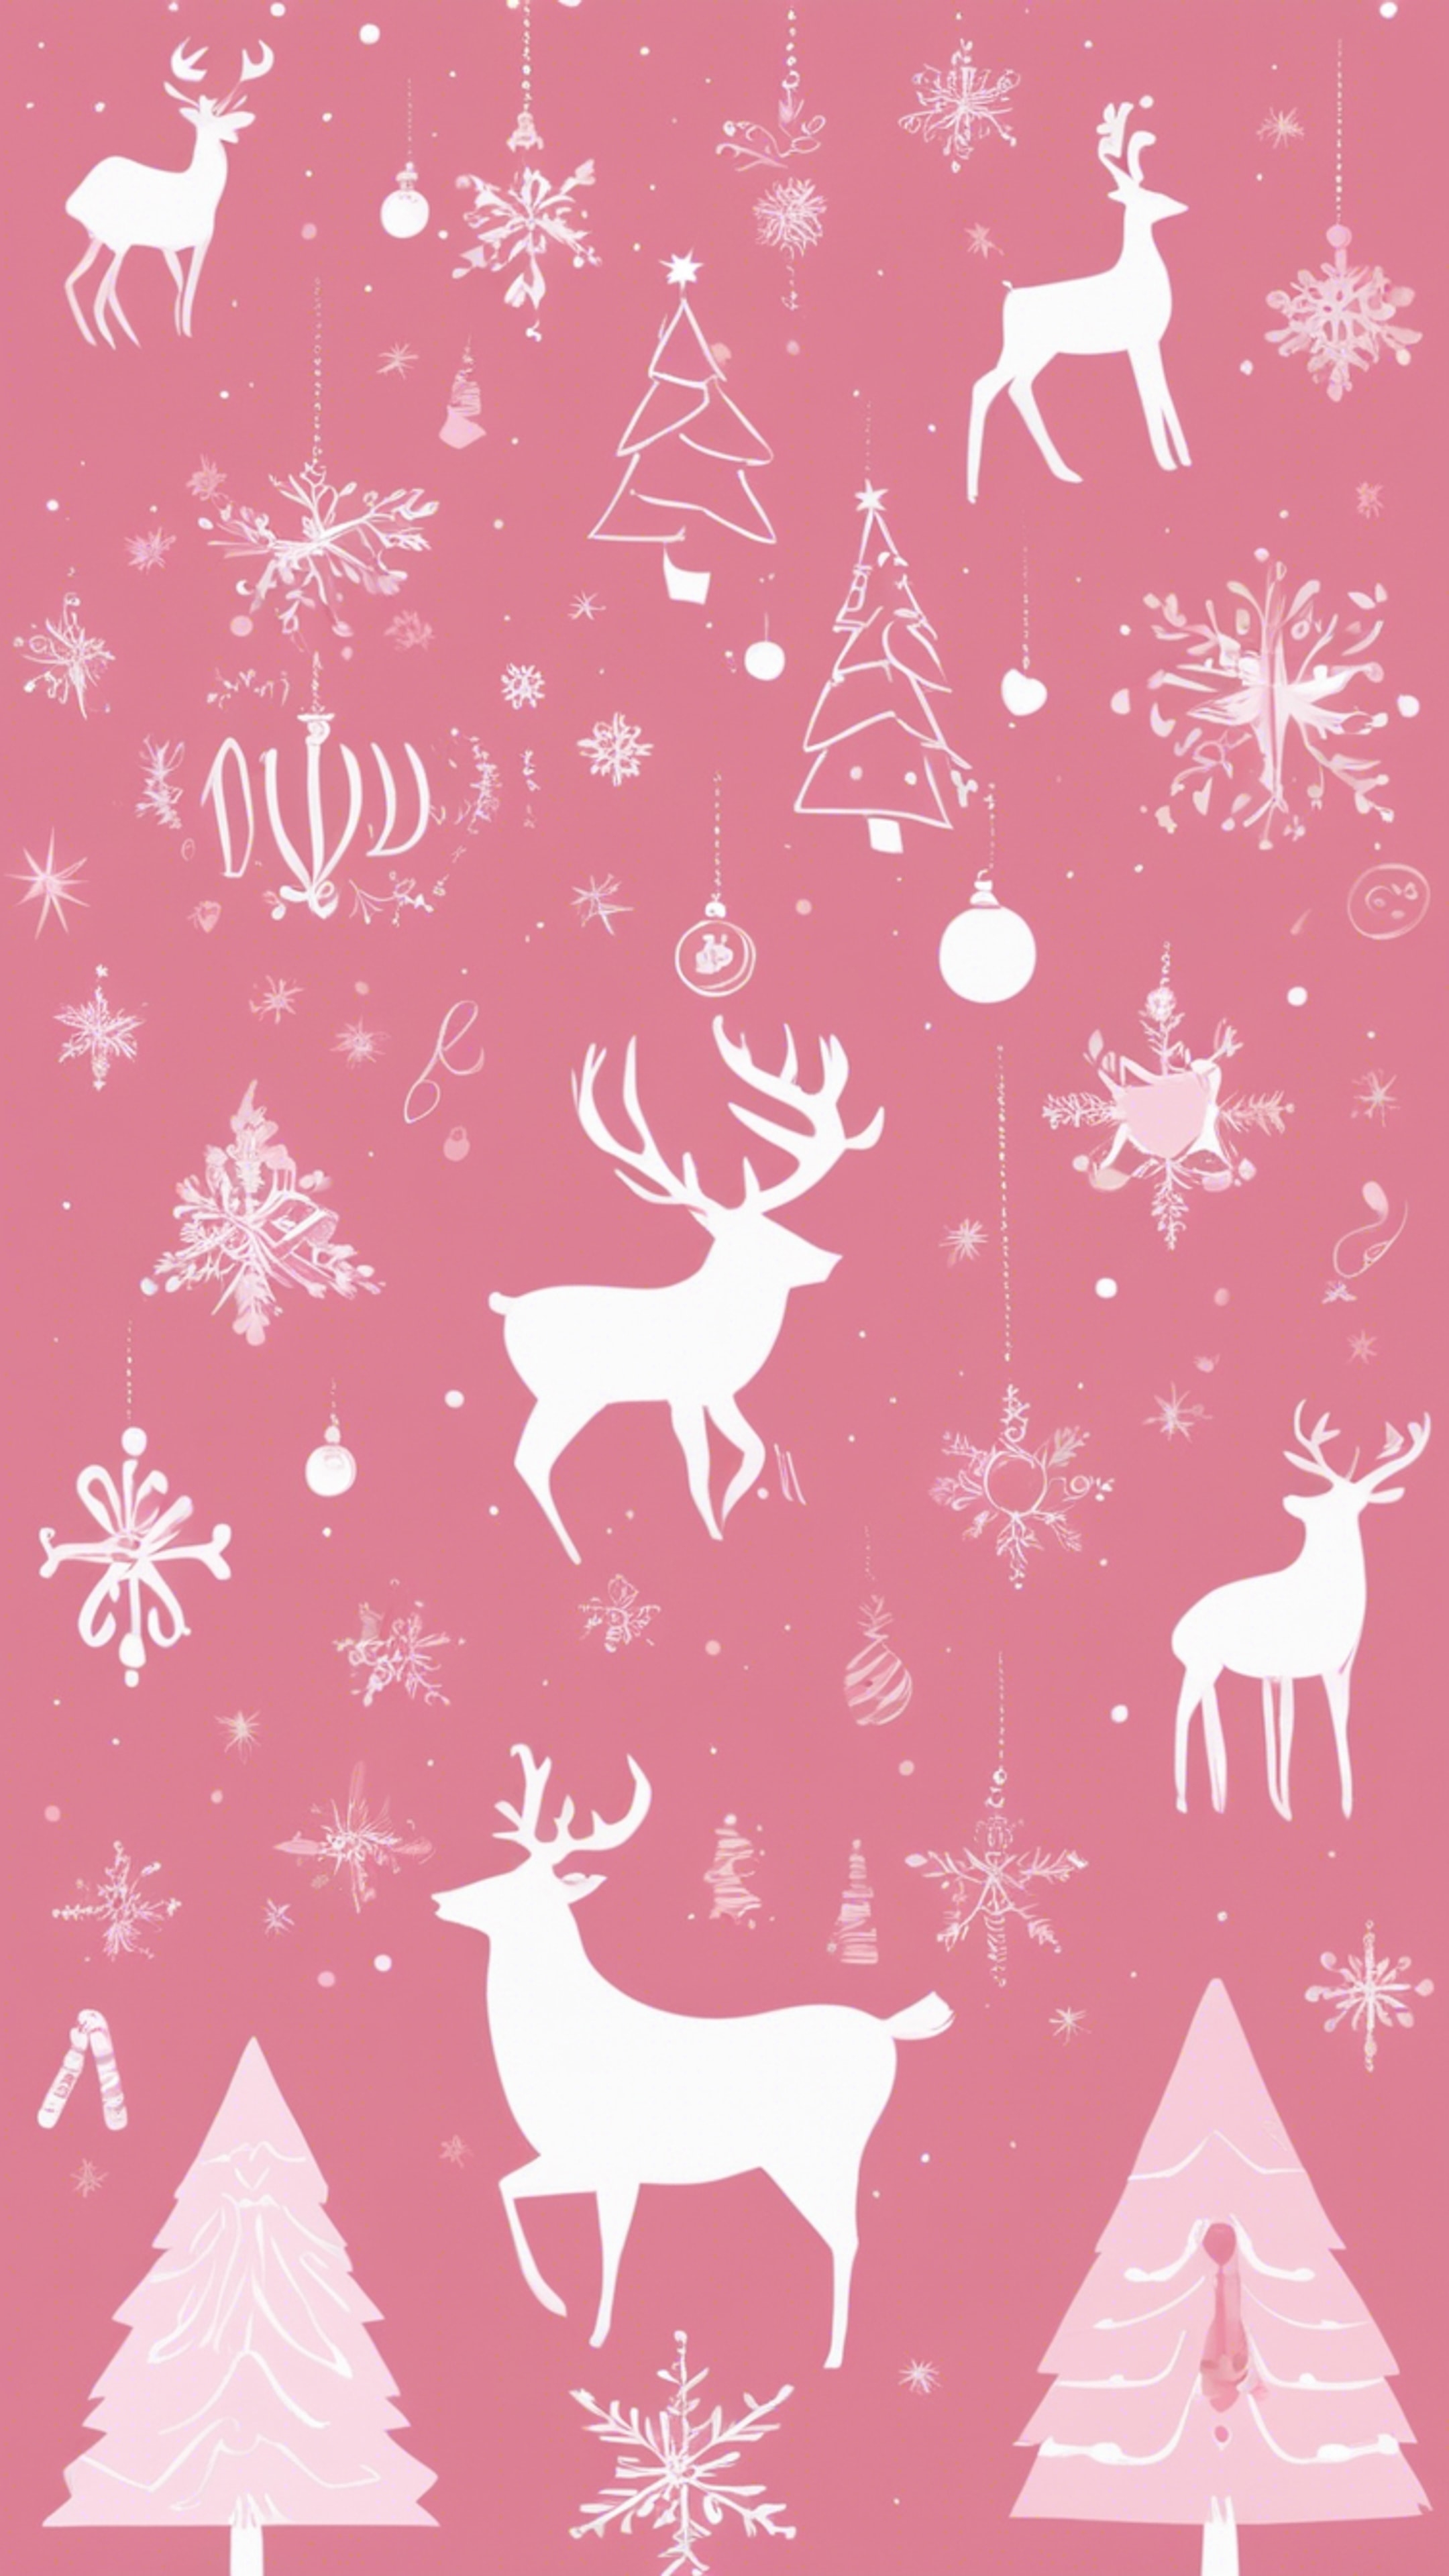 A minimally designed Christmas card with elegant pink illustrations of Christmas icons. duvar kağıdı[9459a801713f4624aabe]